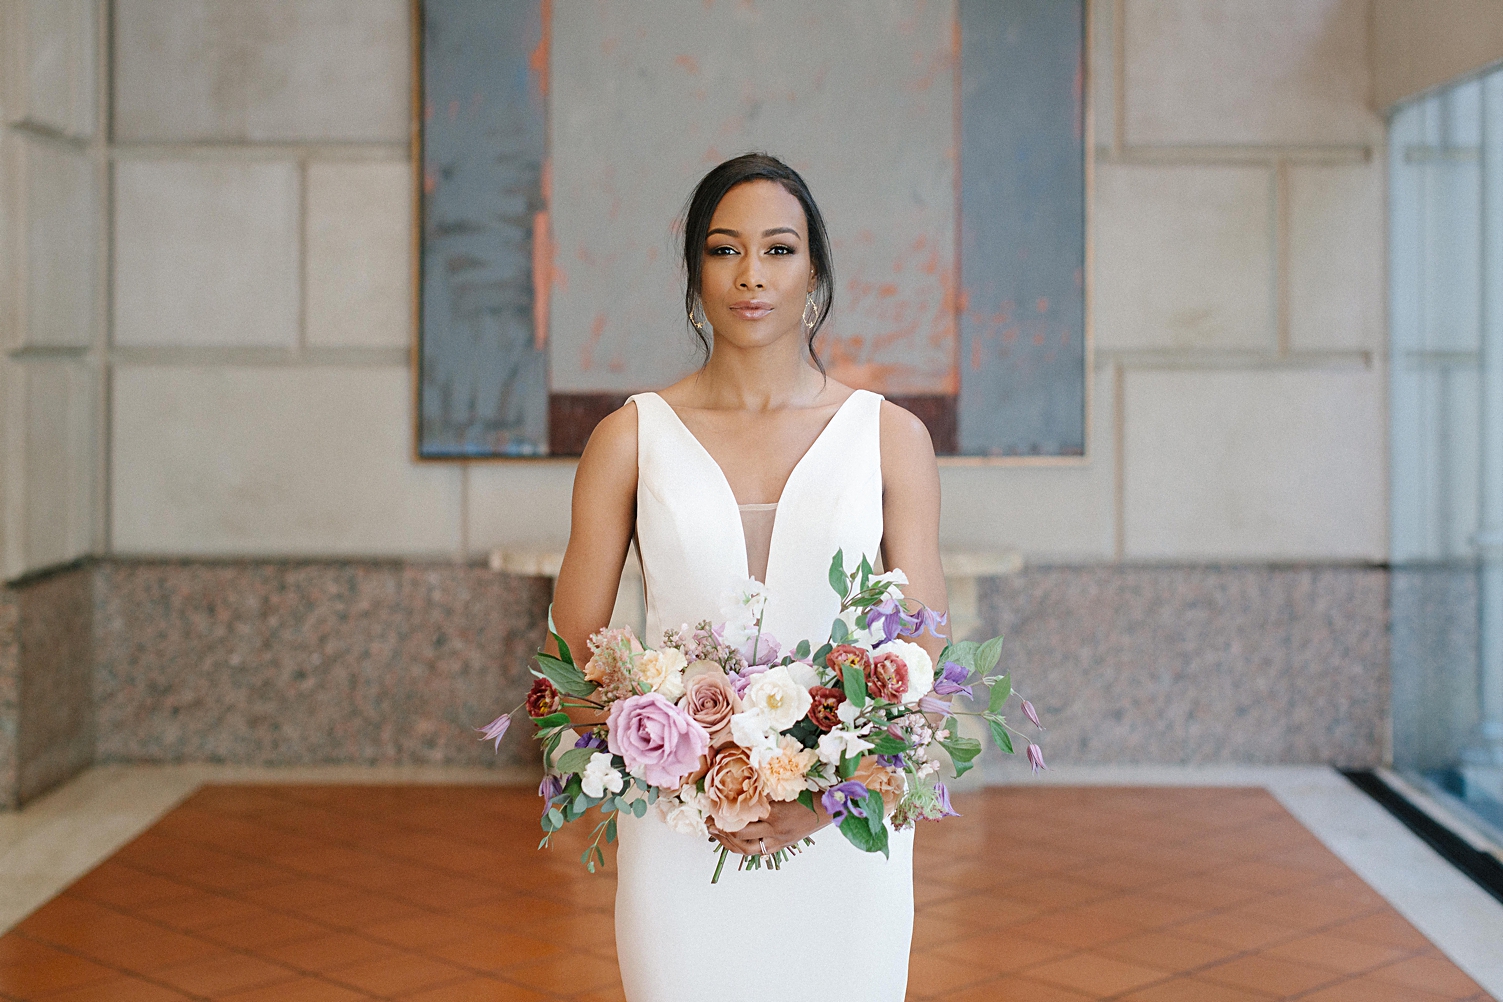 Bride in modern wedding dress holding bouquet